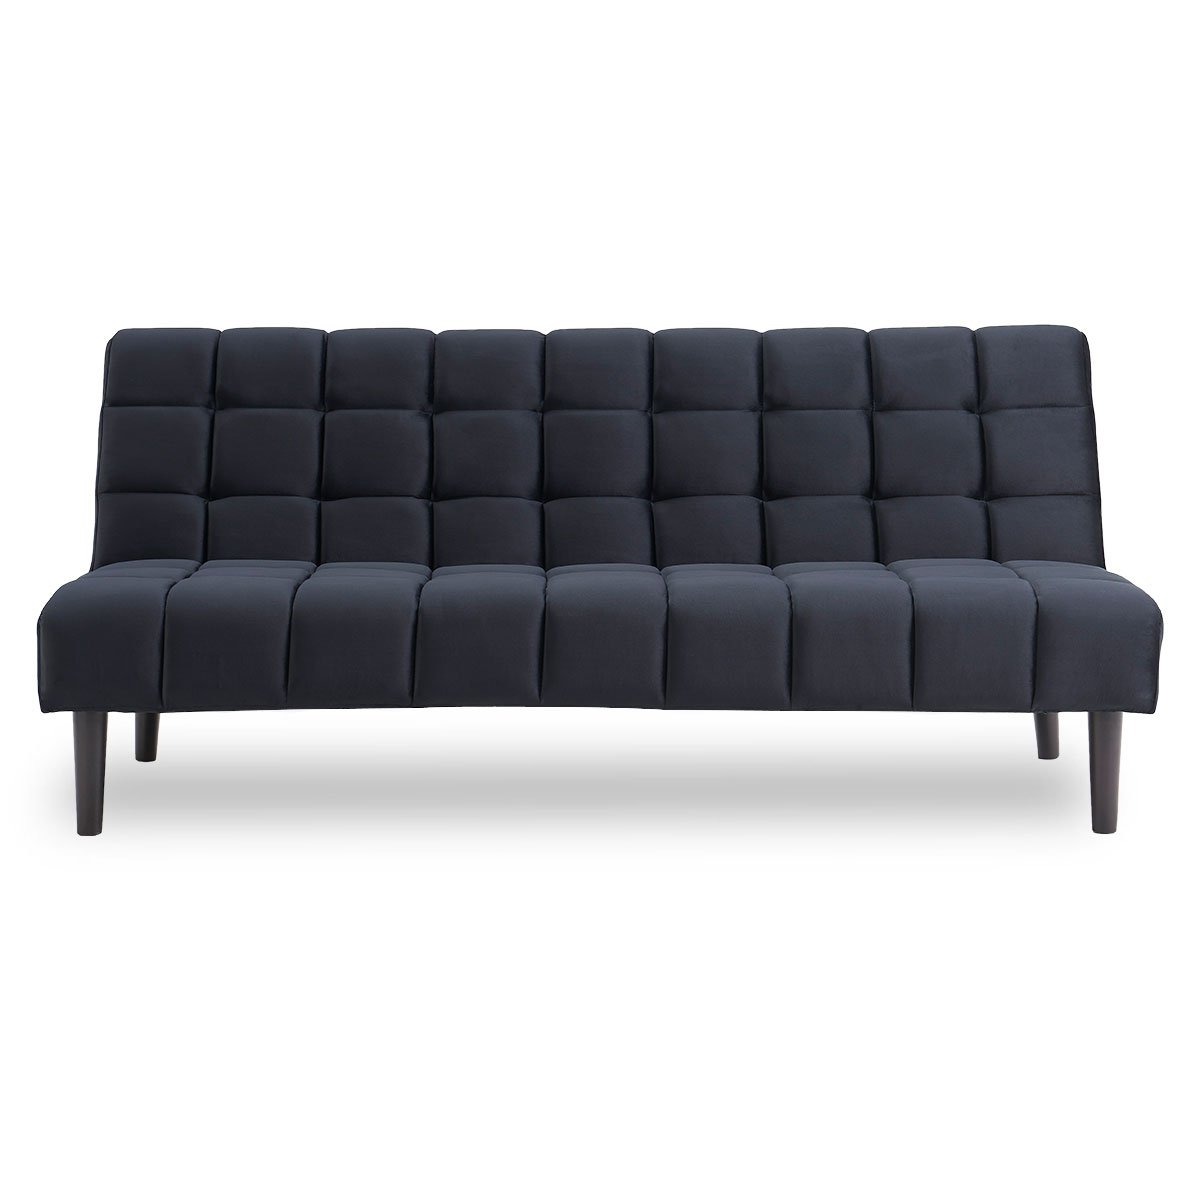 Sarantino Faux Suede Fabric Sofa Bed Furniture Lounge Seat Black 2